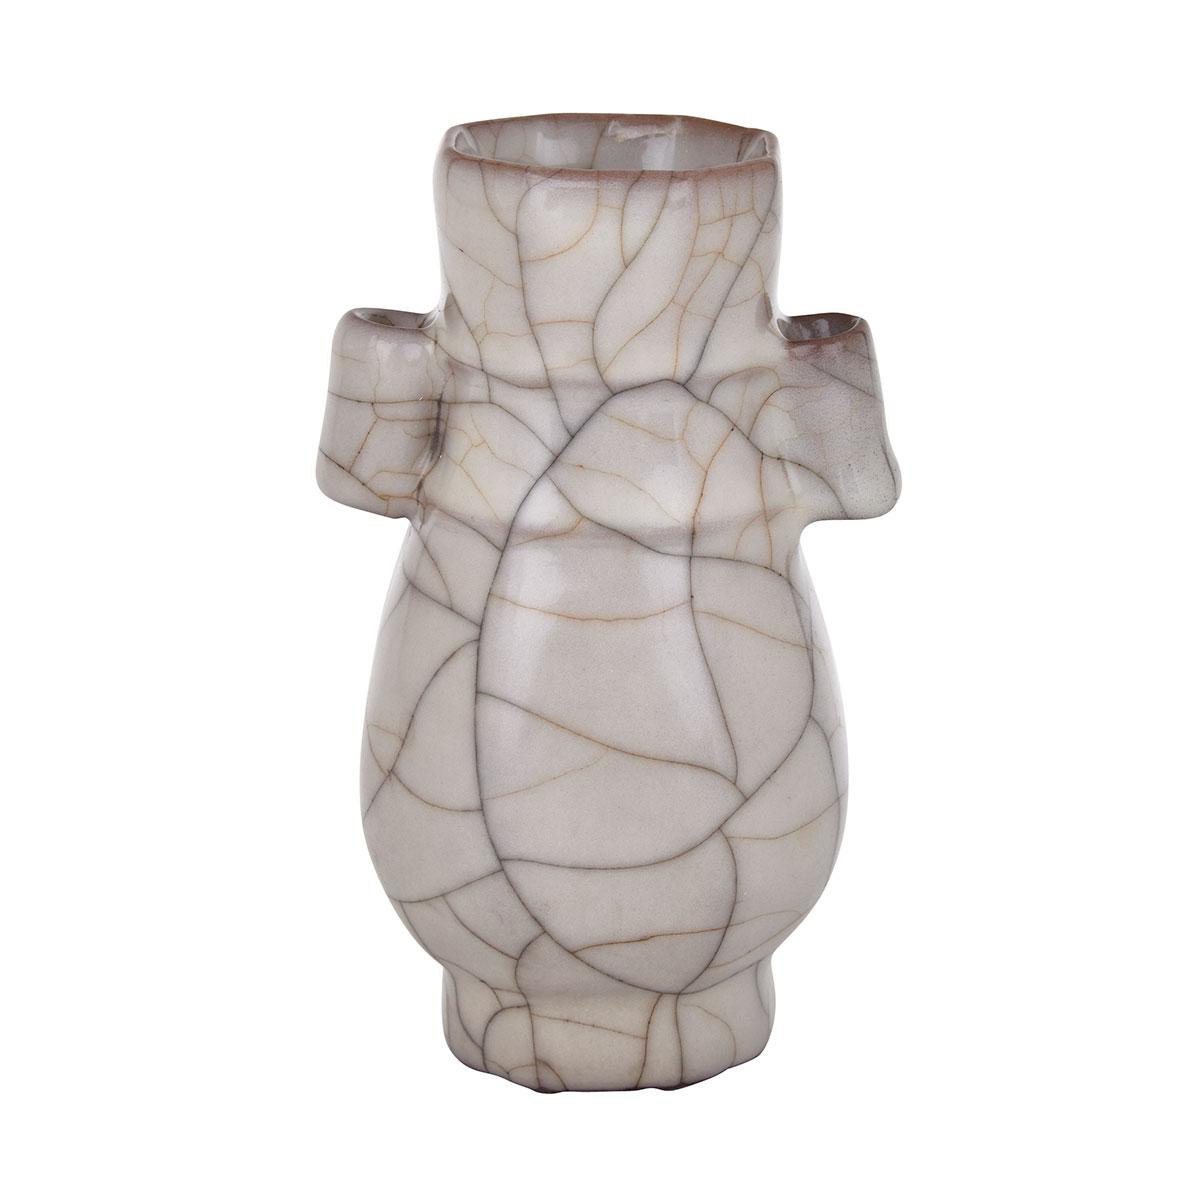 Small Guan-Type Hexagonal Hu Vase, Qing Dynasty or Earlier